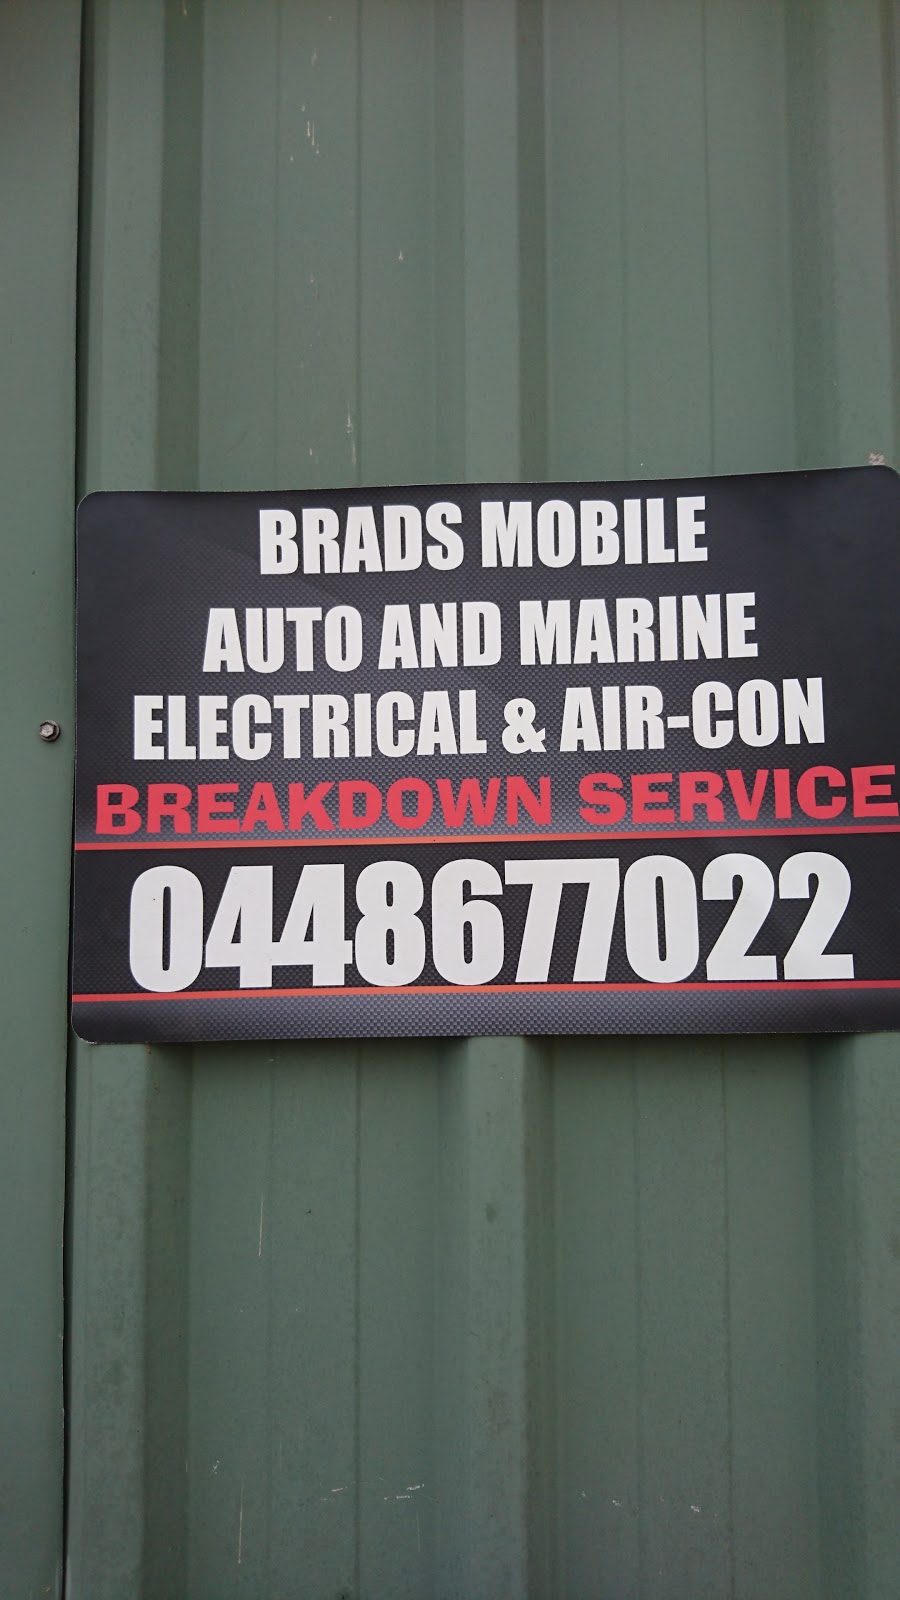 Brads Mobile Auto & Marine Electrical | car repair | 665 Toogoom Rd, Beelbi Creek QLD 4659, Australia | 0448677022 OR +61 448 677 022